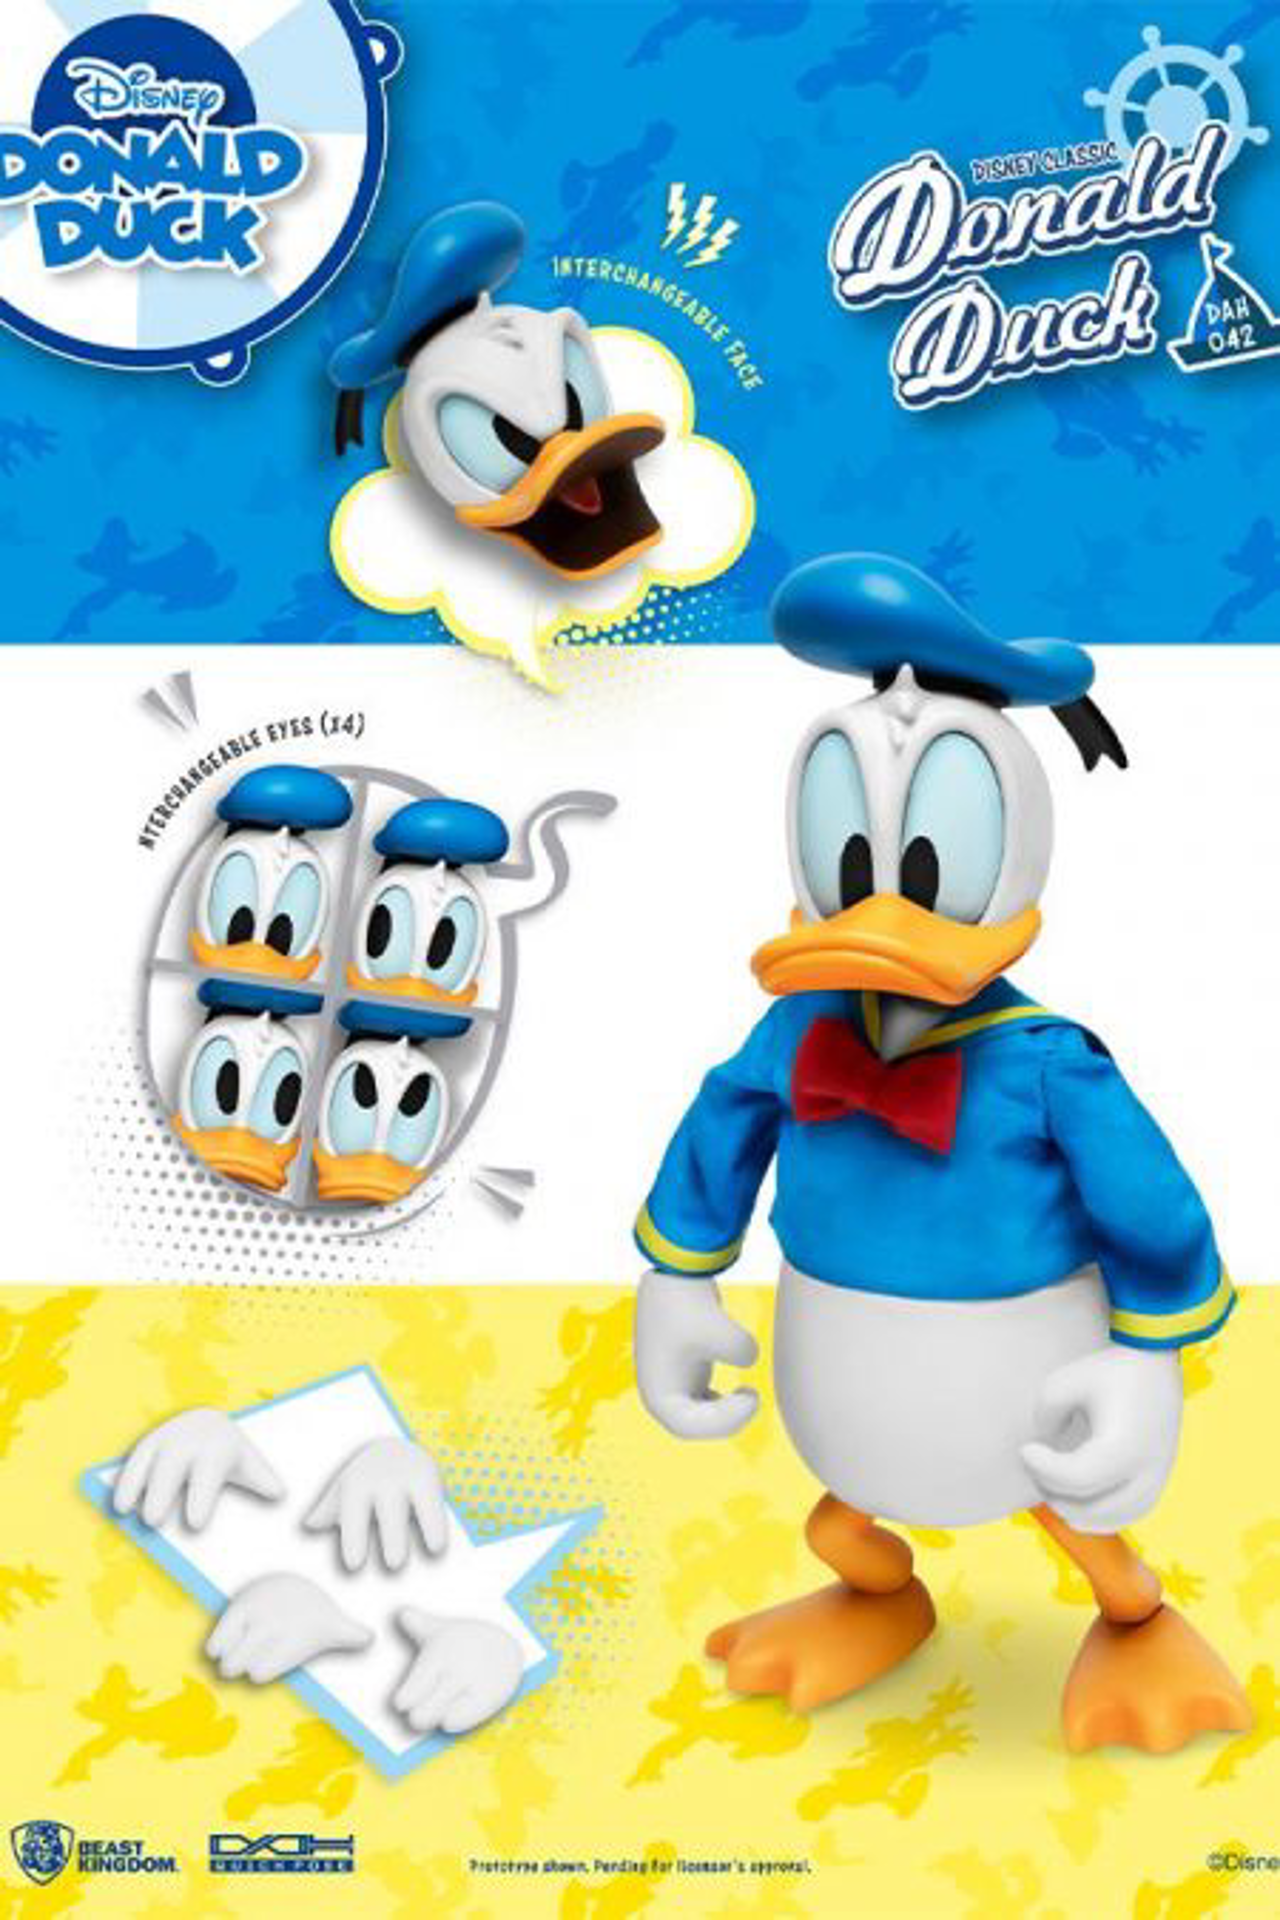 Disney - DAH-042 - Classique Donald Duck